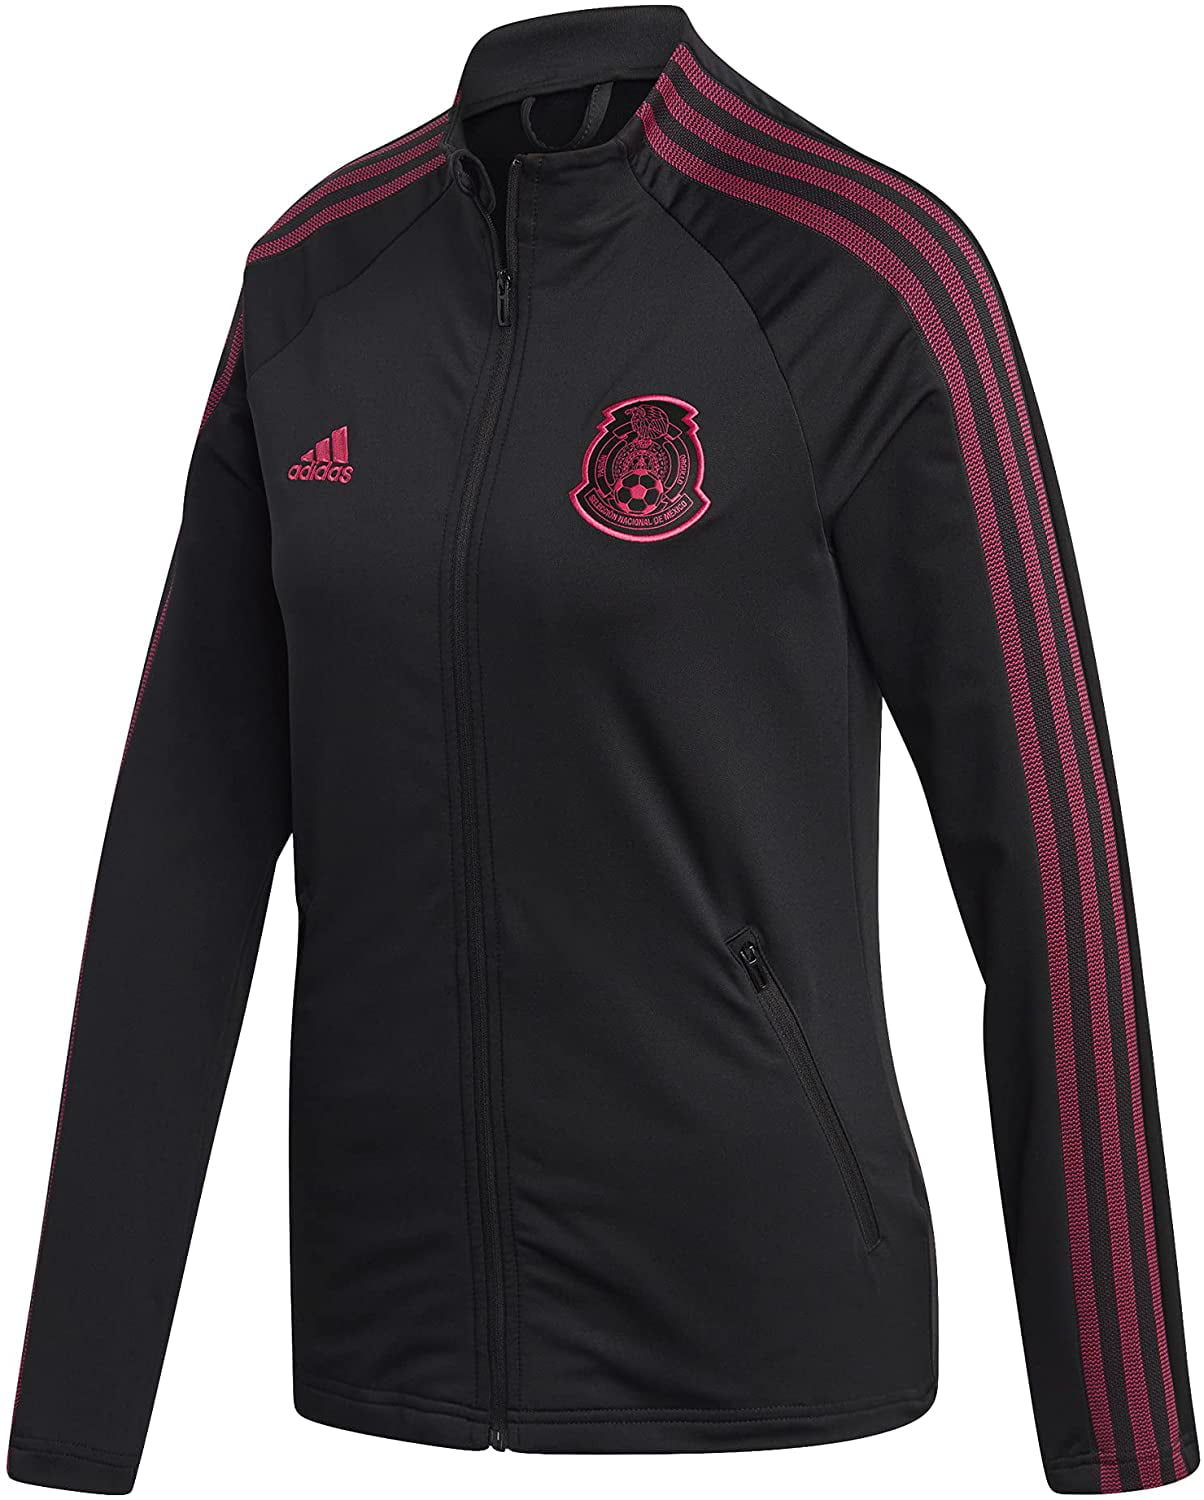 Adidas Women's Mexico National Team Anthem Jacket, Black